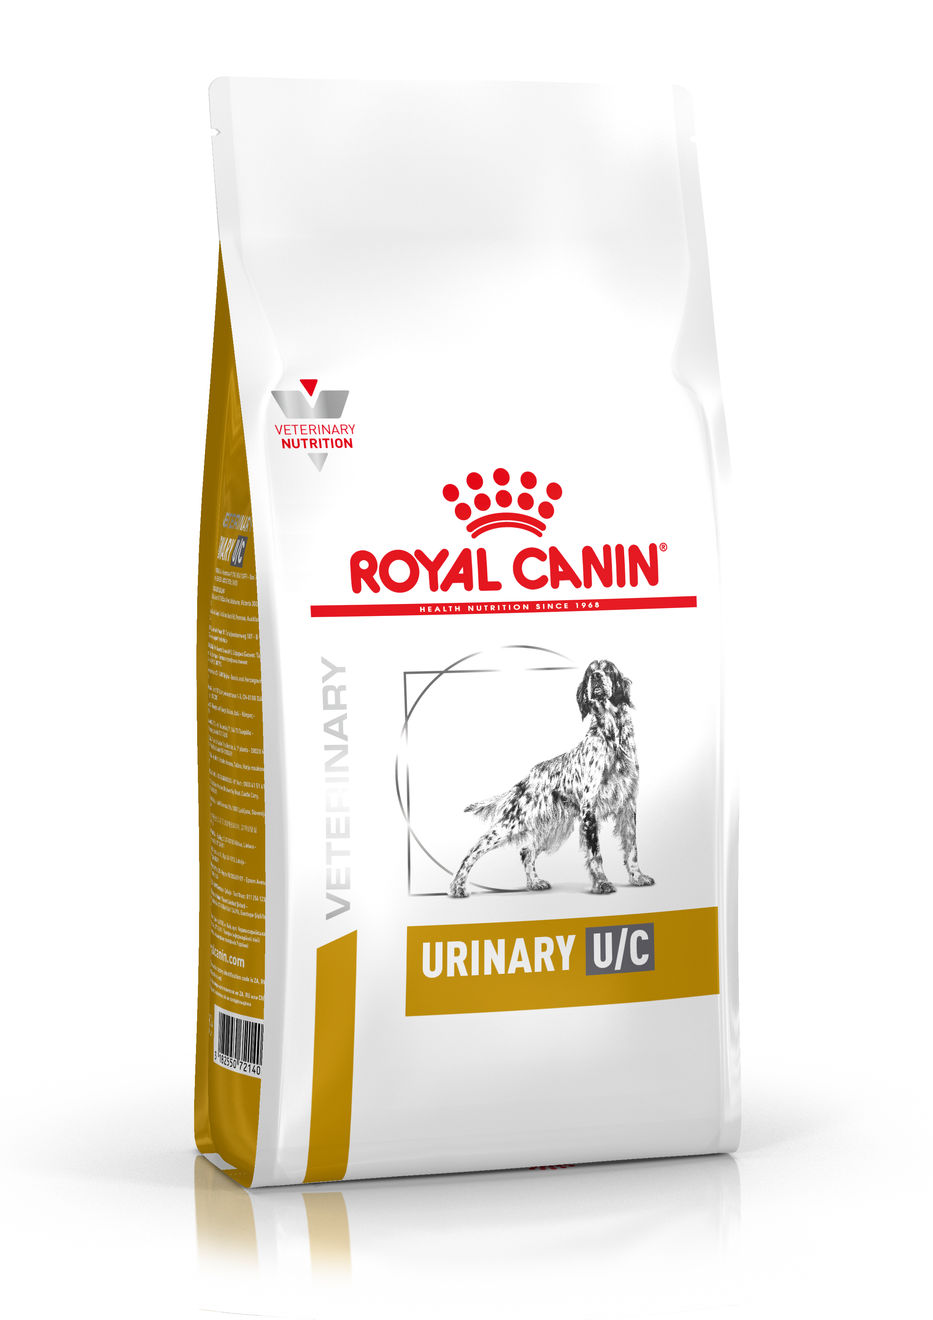 Royal Canin U/C low purine <br>1 x 14 kg